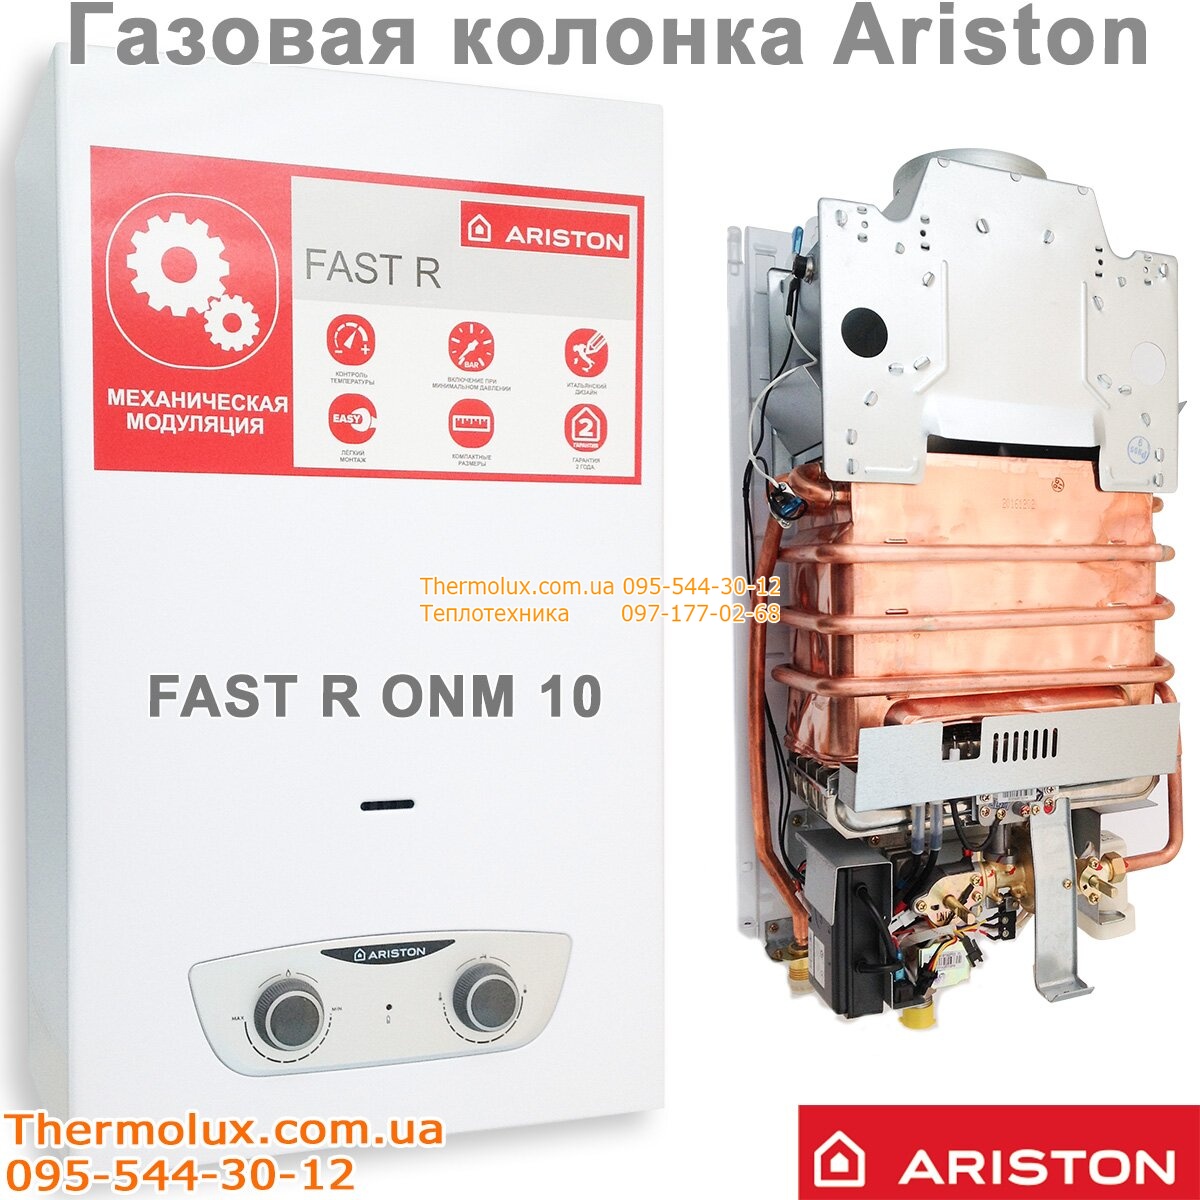 Запчасти на газовую колонку Ariston fast r ONM 14 ng